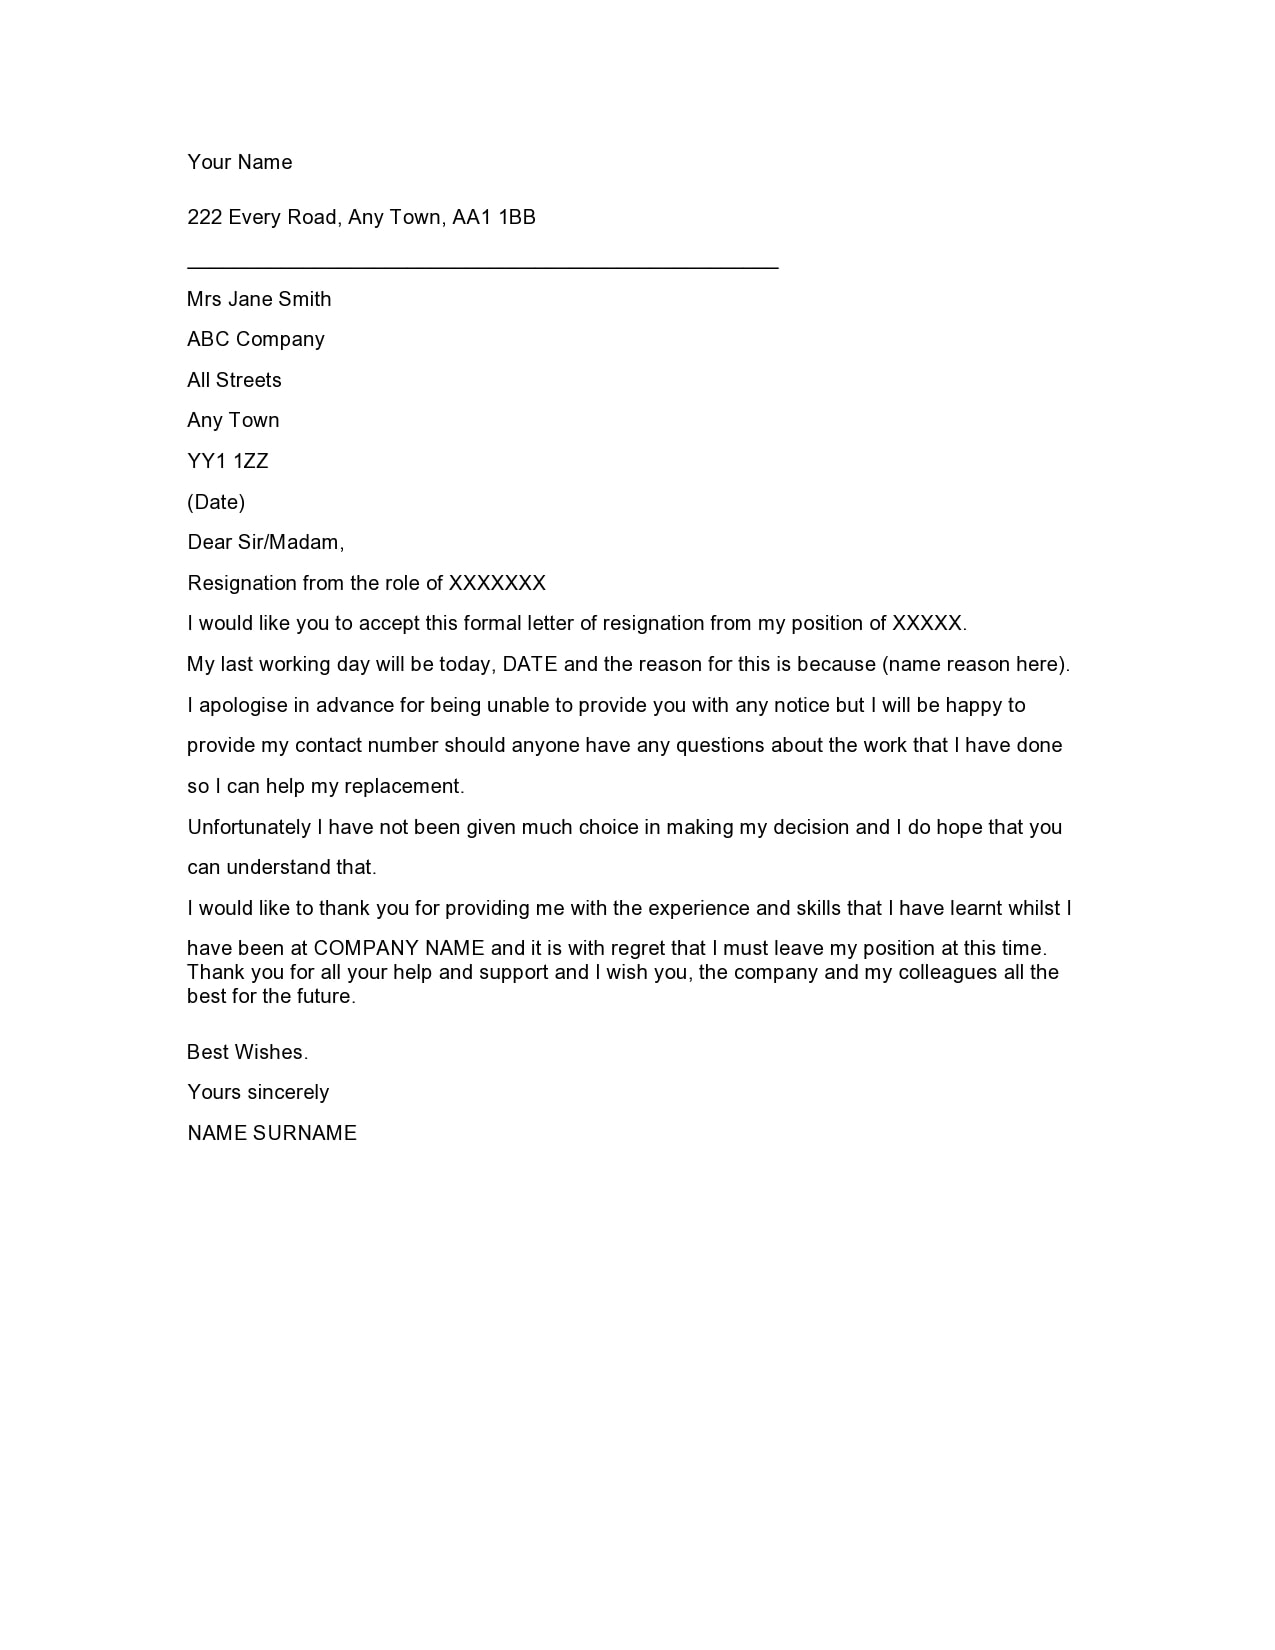 Share About Resignation Letter Australia Latest Nec